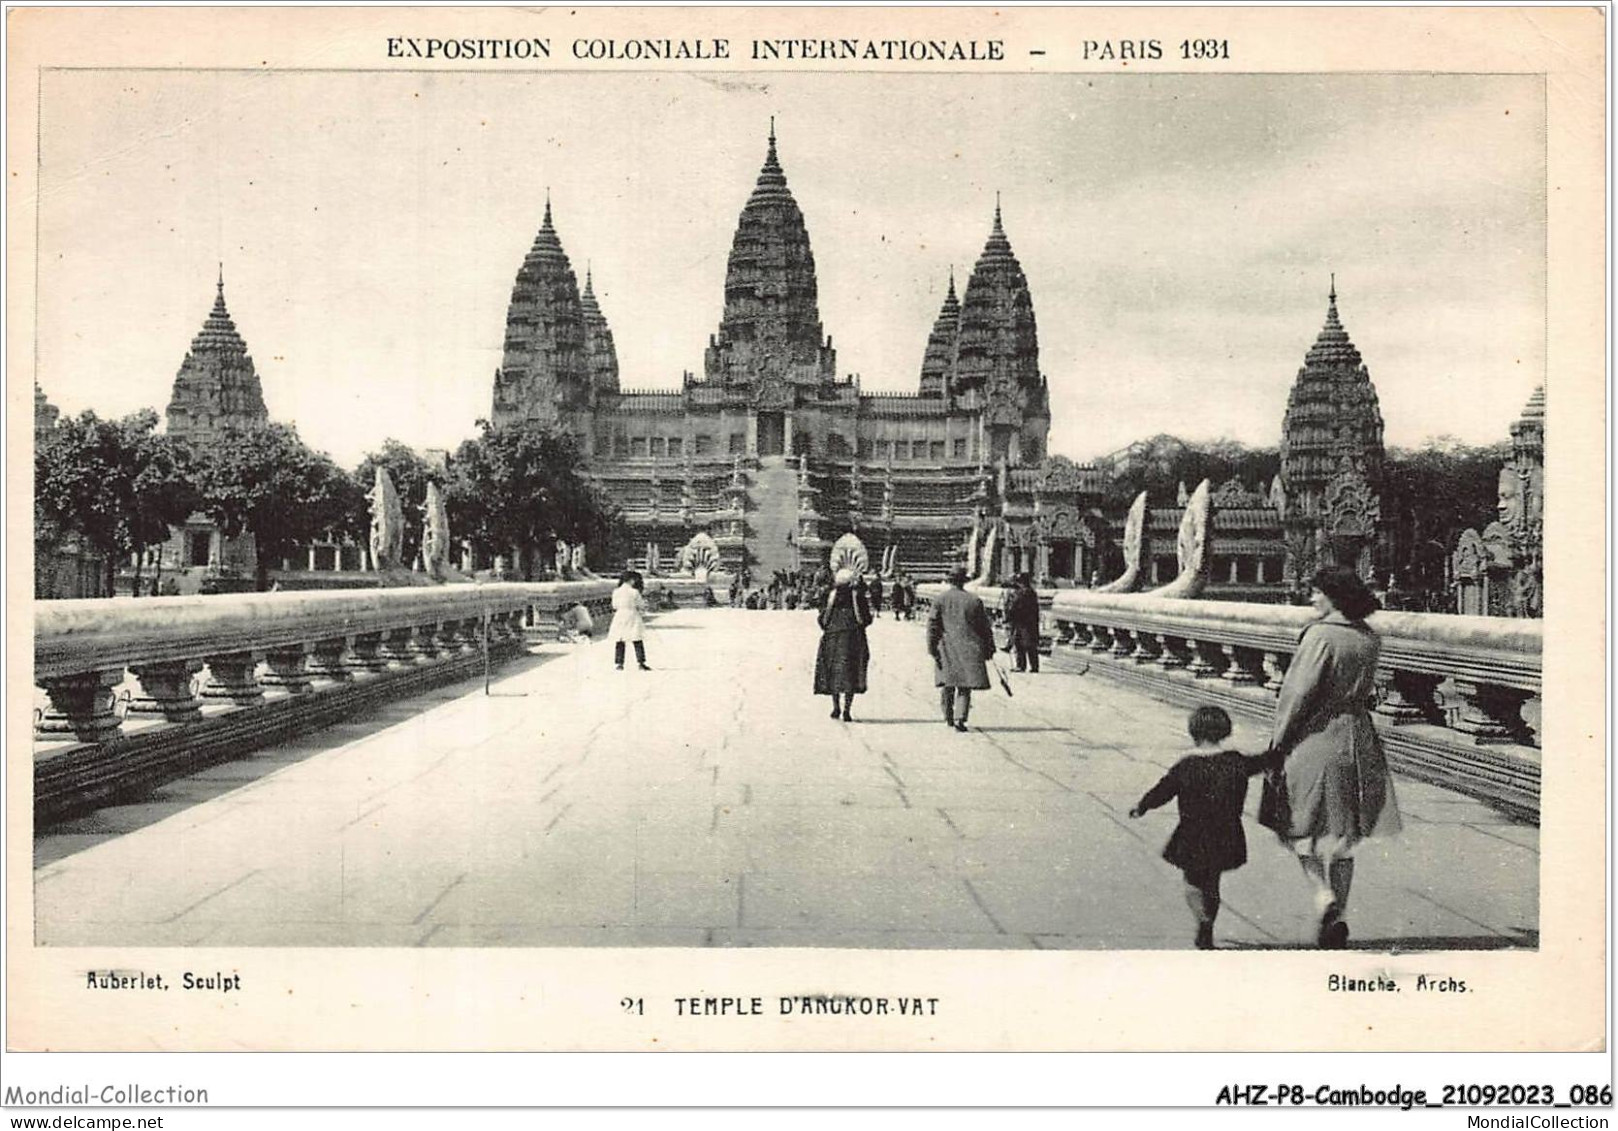 AHZP8-CAMBODGE-0726 - EXPOSITION COLONIALE INTERNATIONALE - PARIS 1931 - TEMPLE D'ANGKOR-VAT - Cambodge